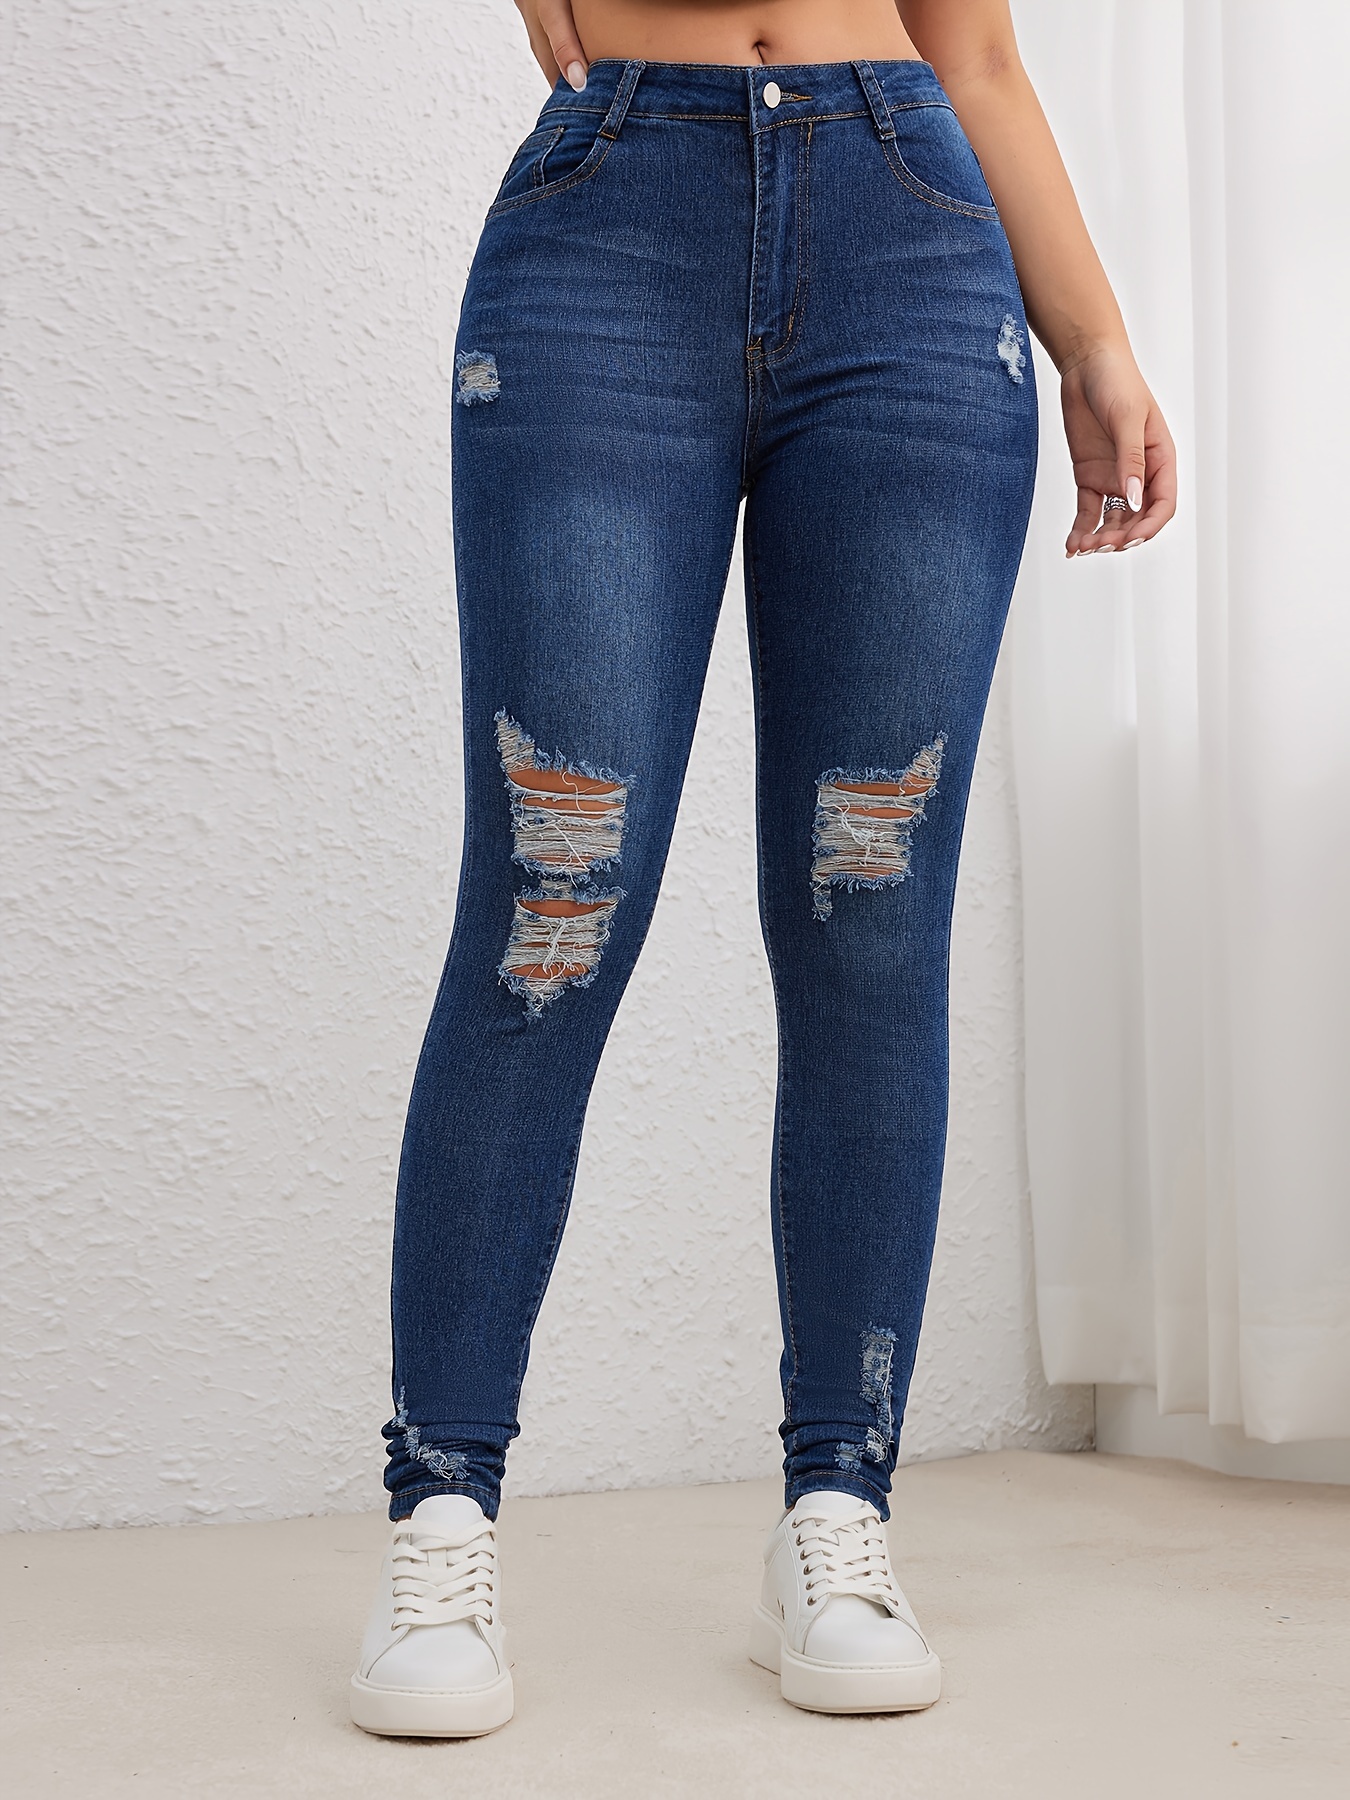 Pantalones Mujer Pegados Jeans